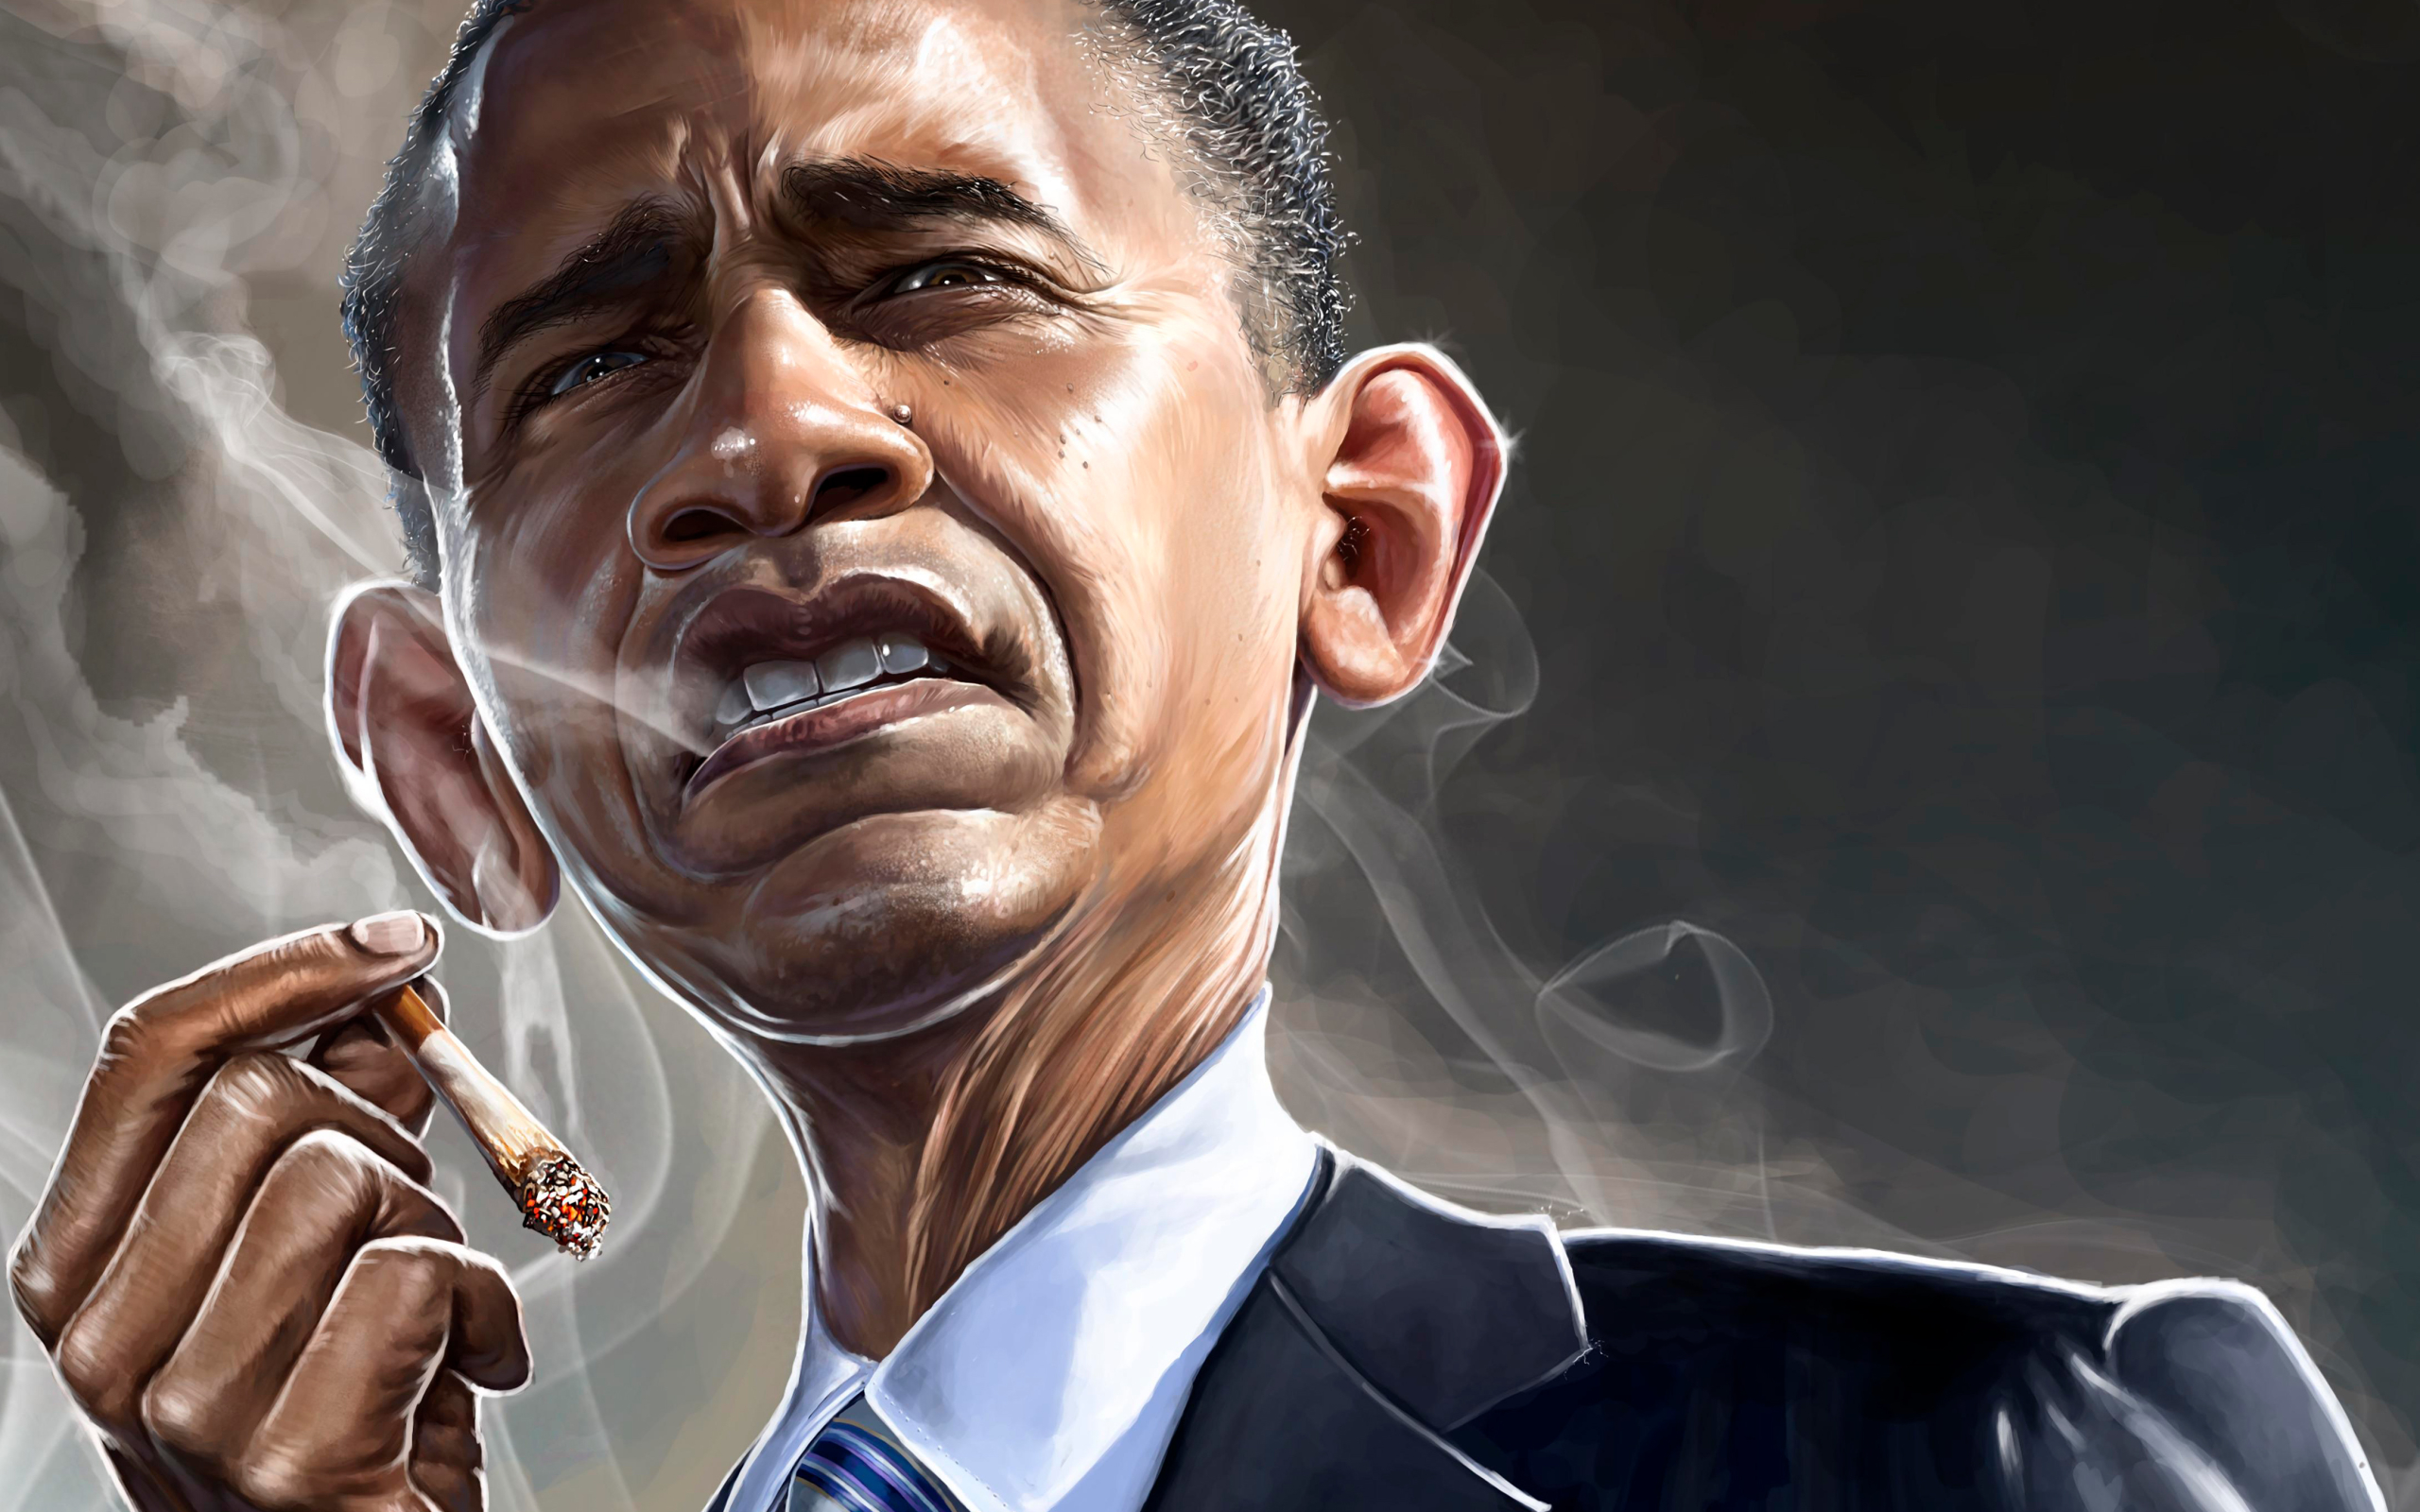 Wallpaper Of American Barack Obama Caricature Cigarette